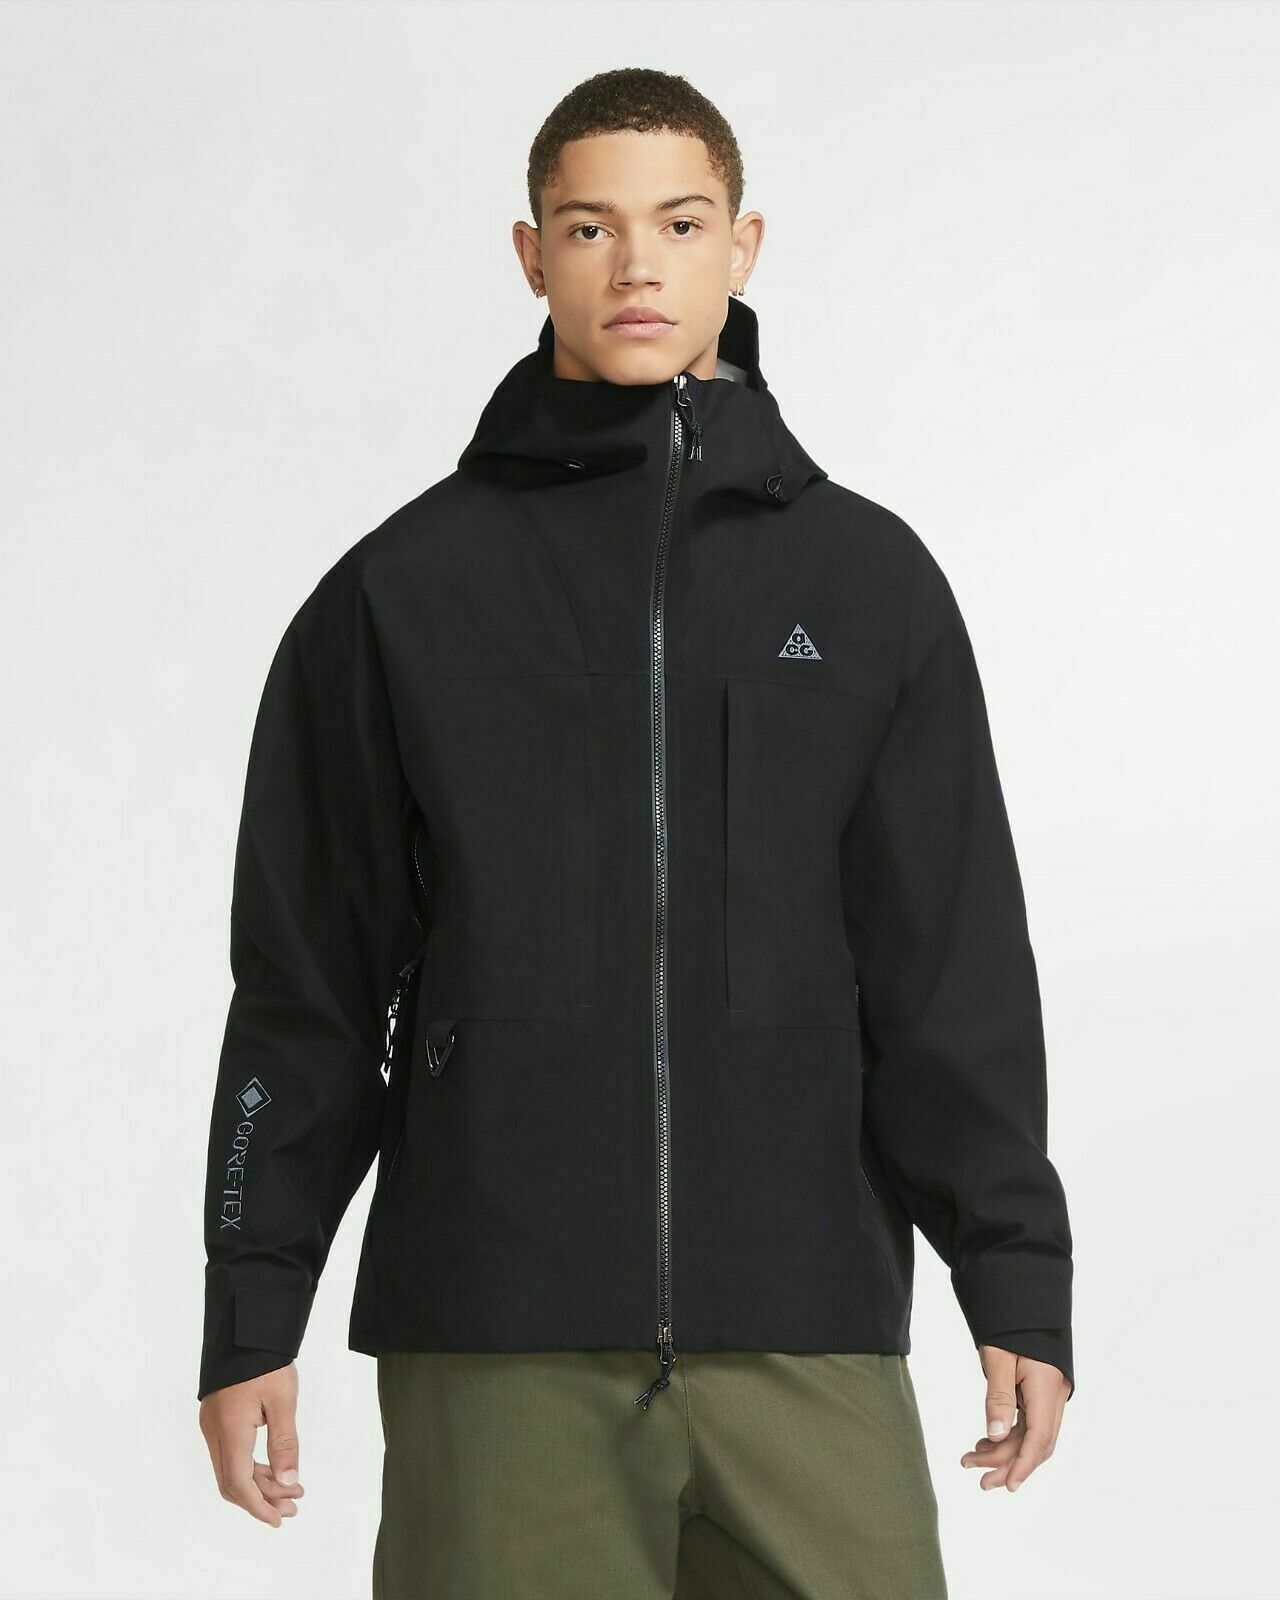 New Nike Acg Gore Tex Misery Ridge Black Jacket Men's Multi Size Cv0634-010